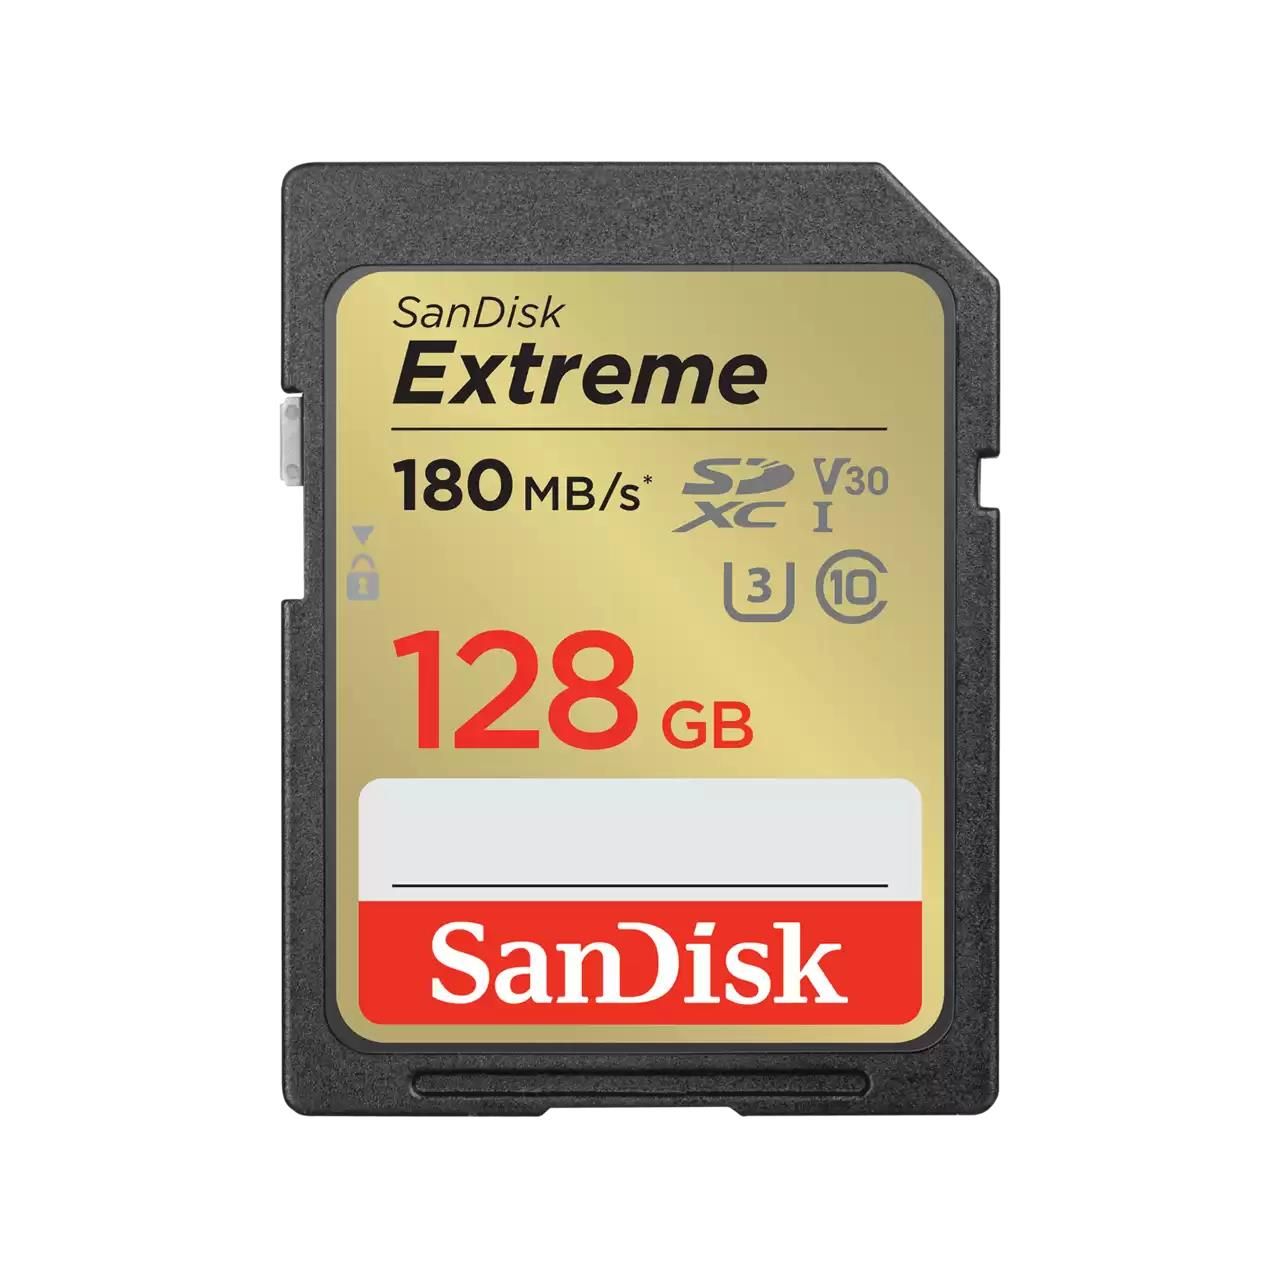 SanDisk Extreme 128Gb SDHC